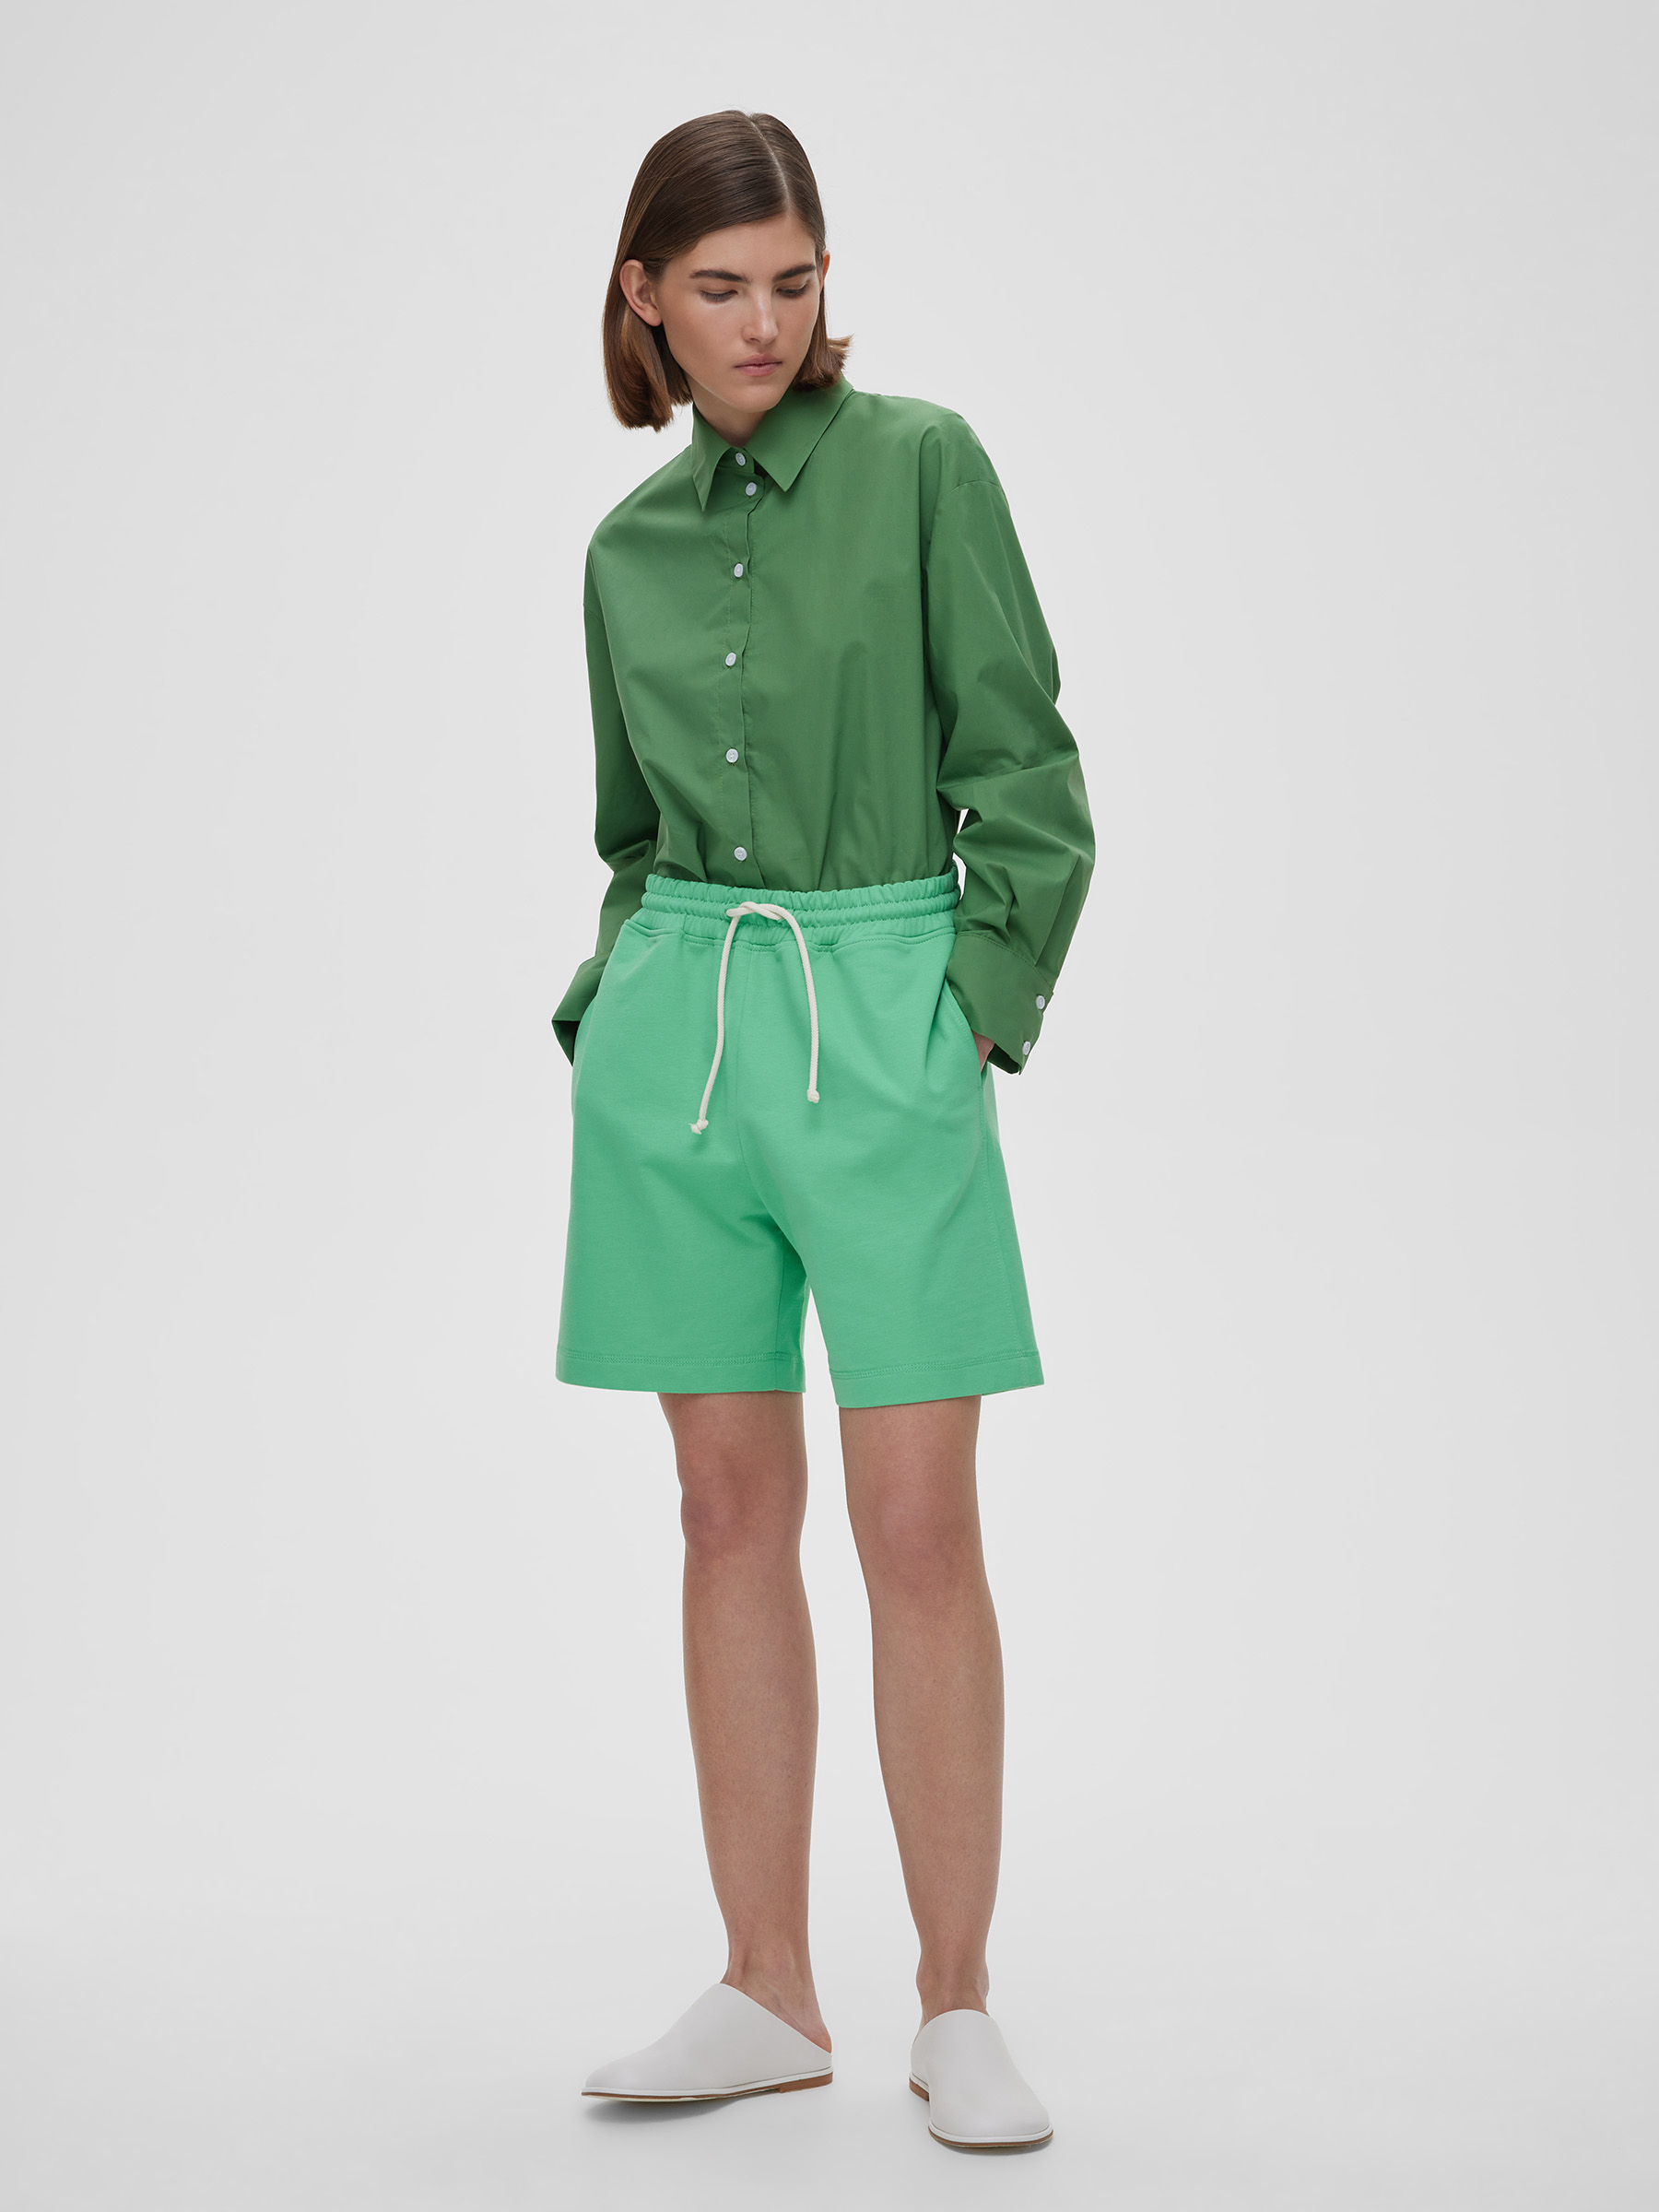 Шорты женские из футера, цвет – зеленый шорты женские из футера цвет – бежевый